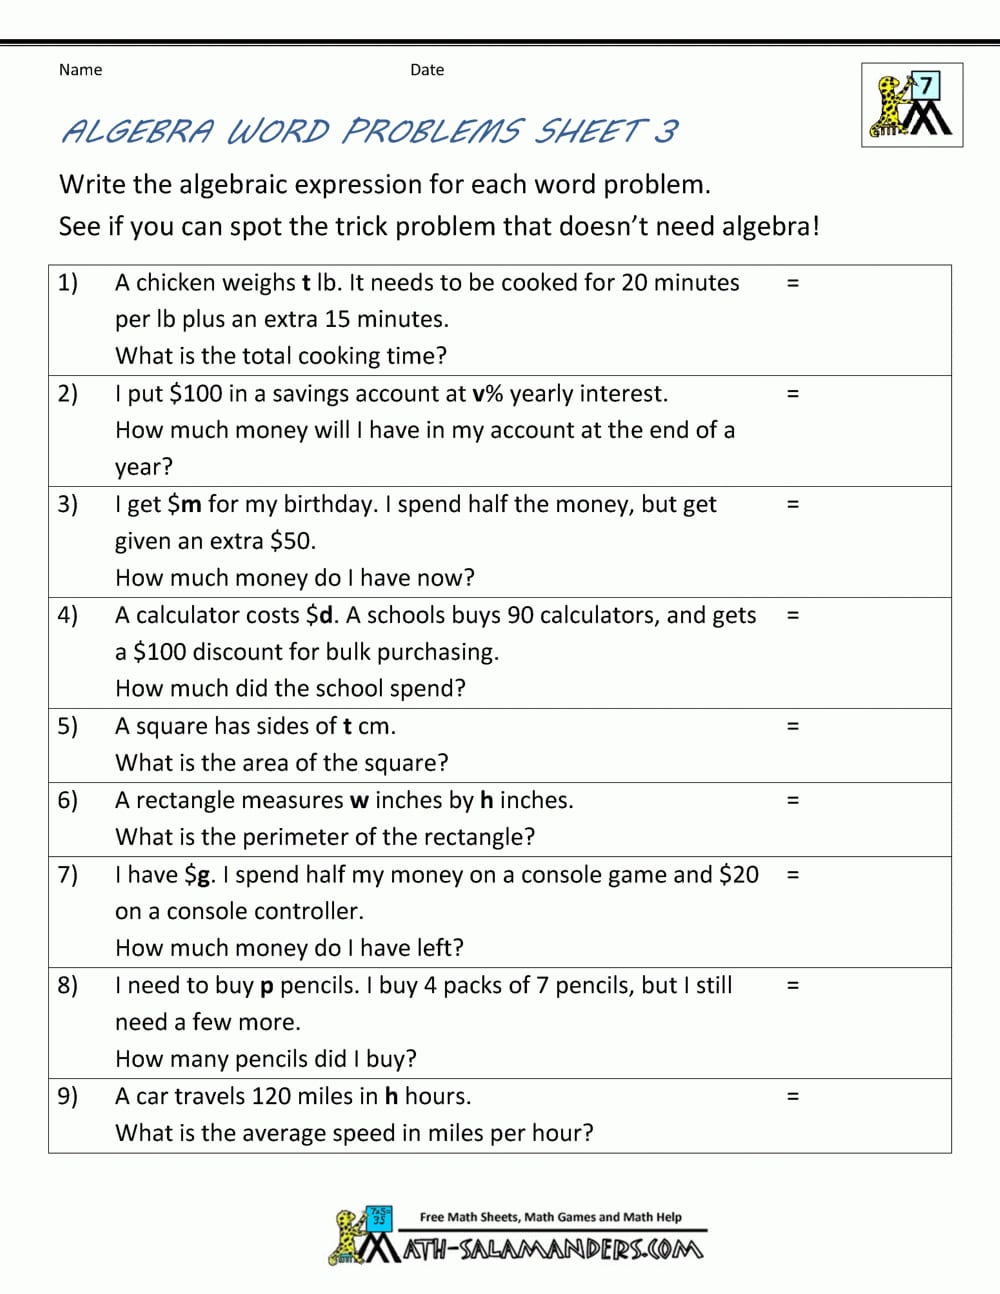 Basic Algebra Worksheets Along With Solving Problems Algebraically Worksheet Answers